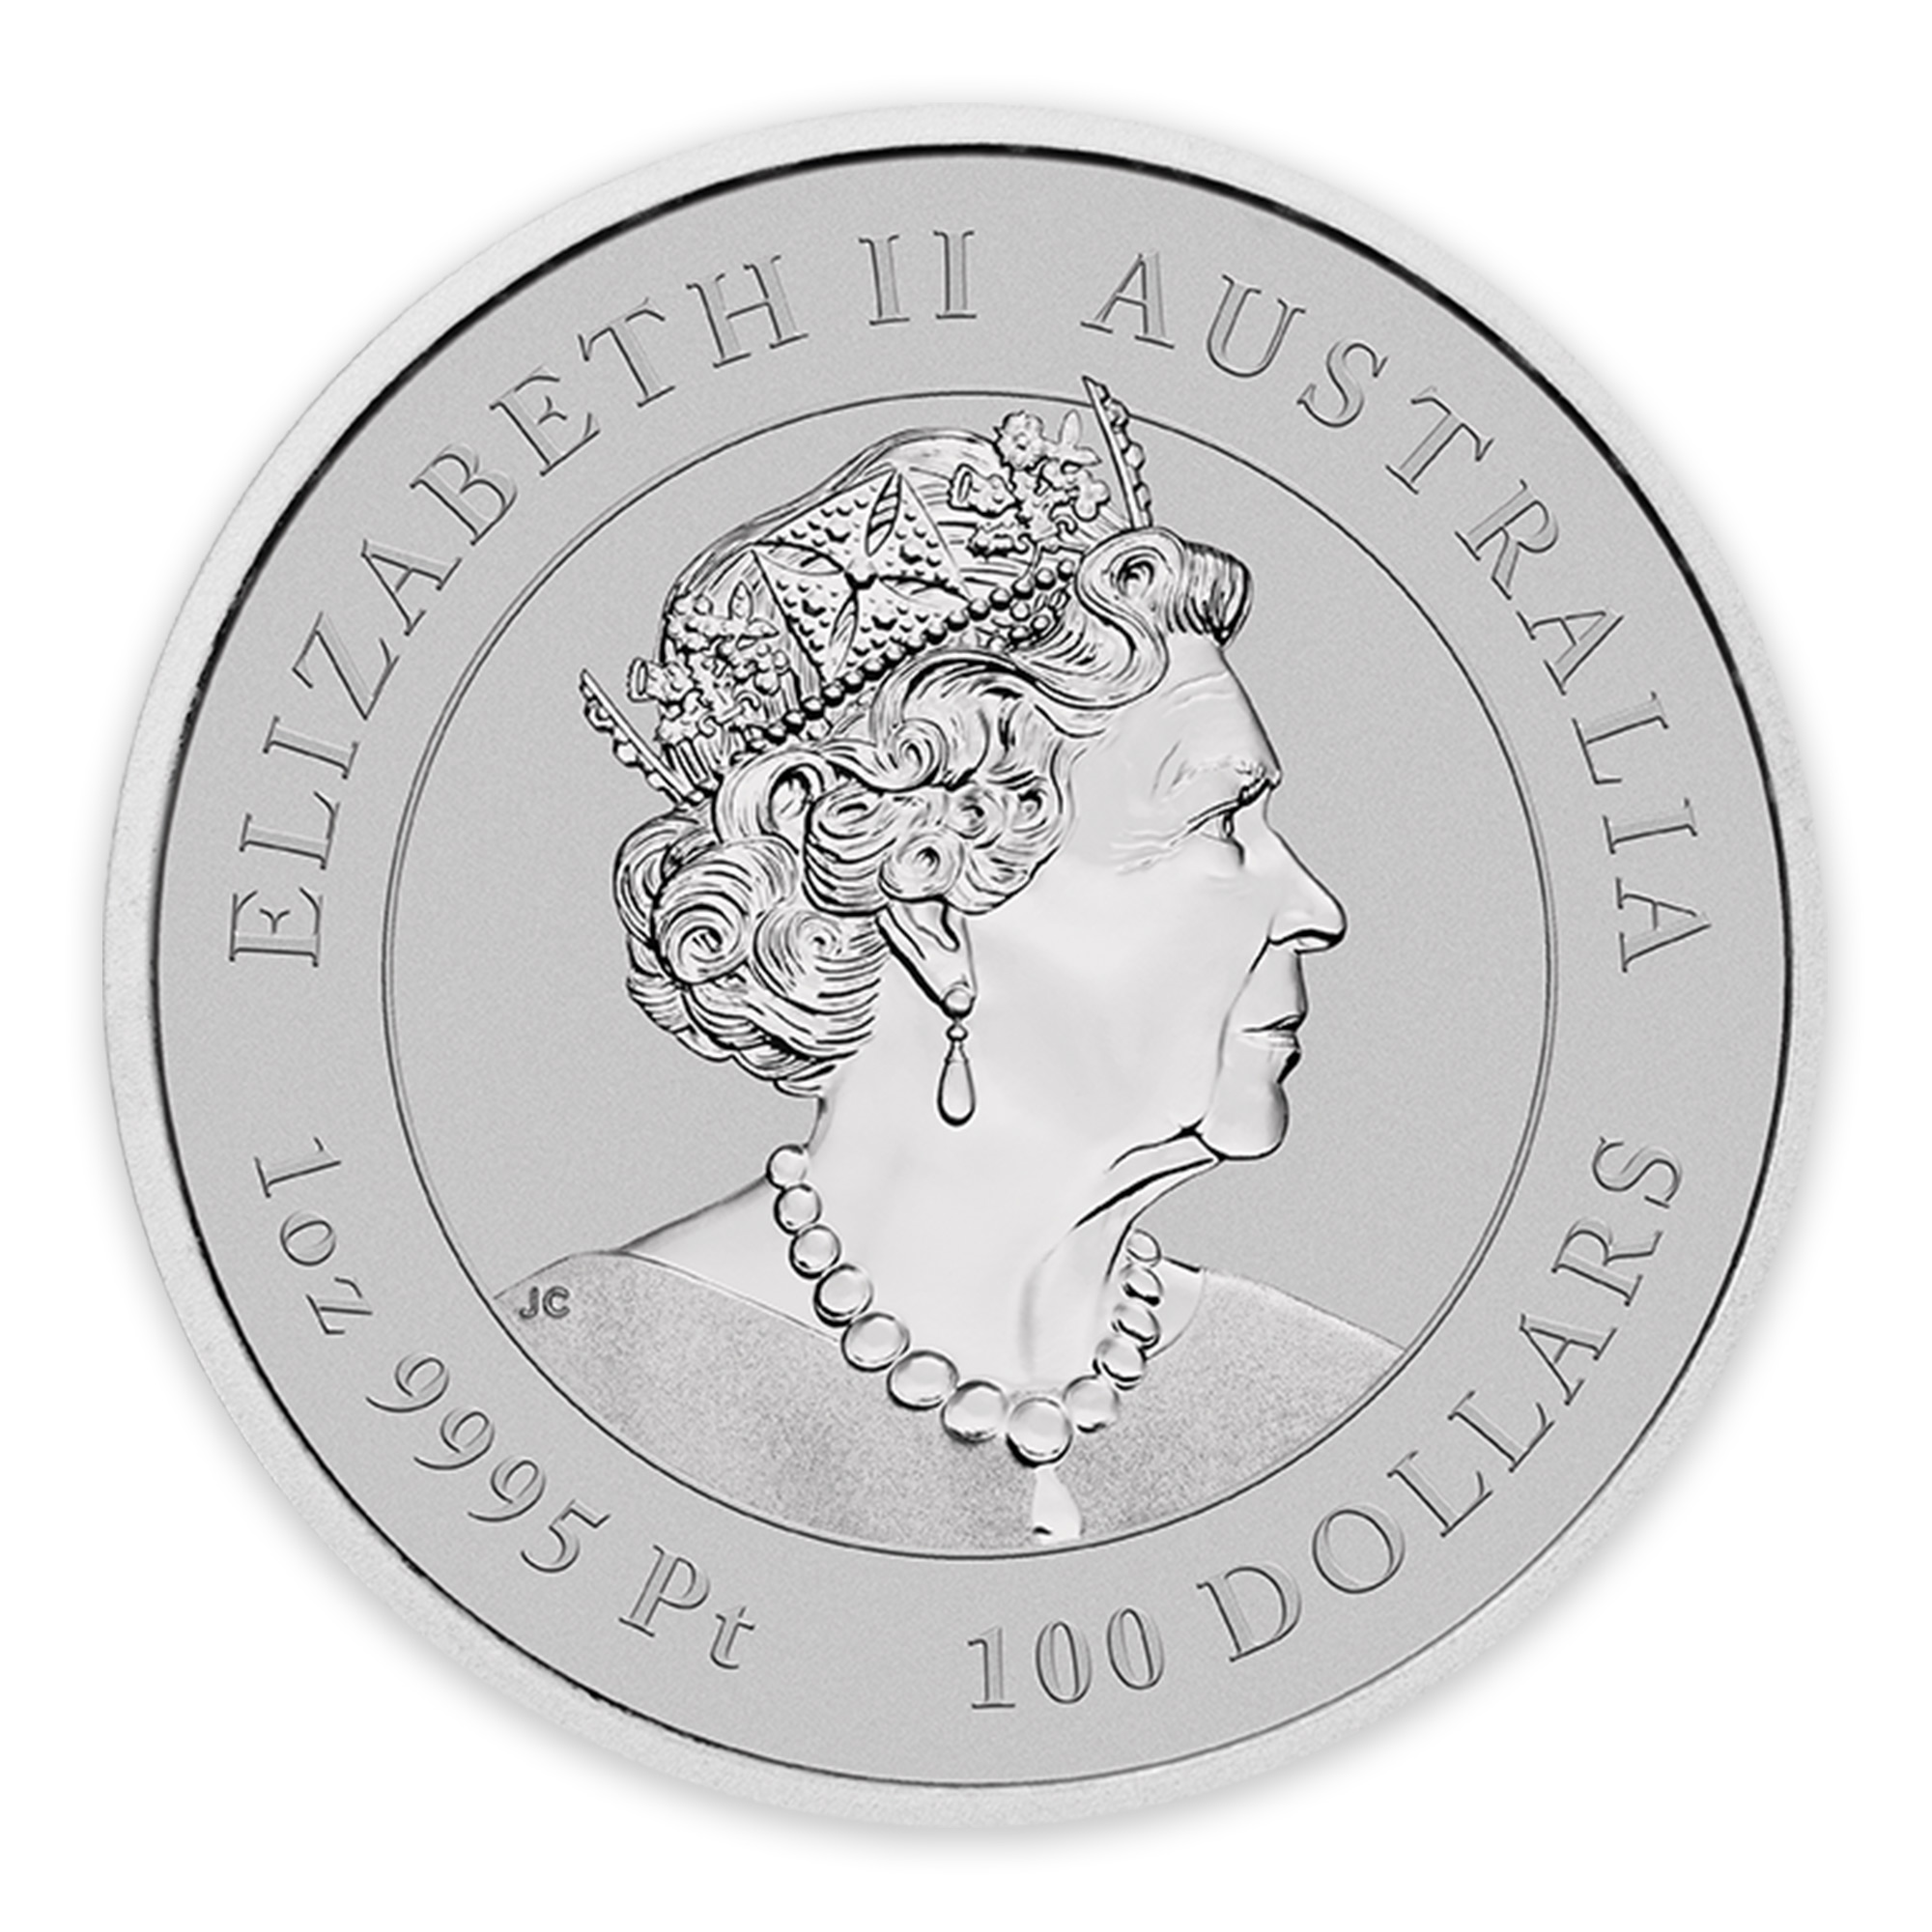 2023 1oz Perth Mint Platinum Lunar Rabbit Coin Series 3